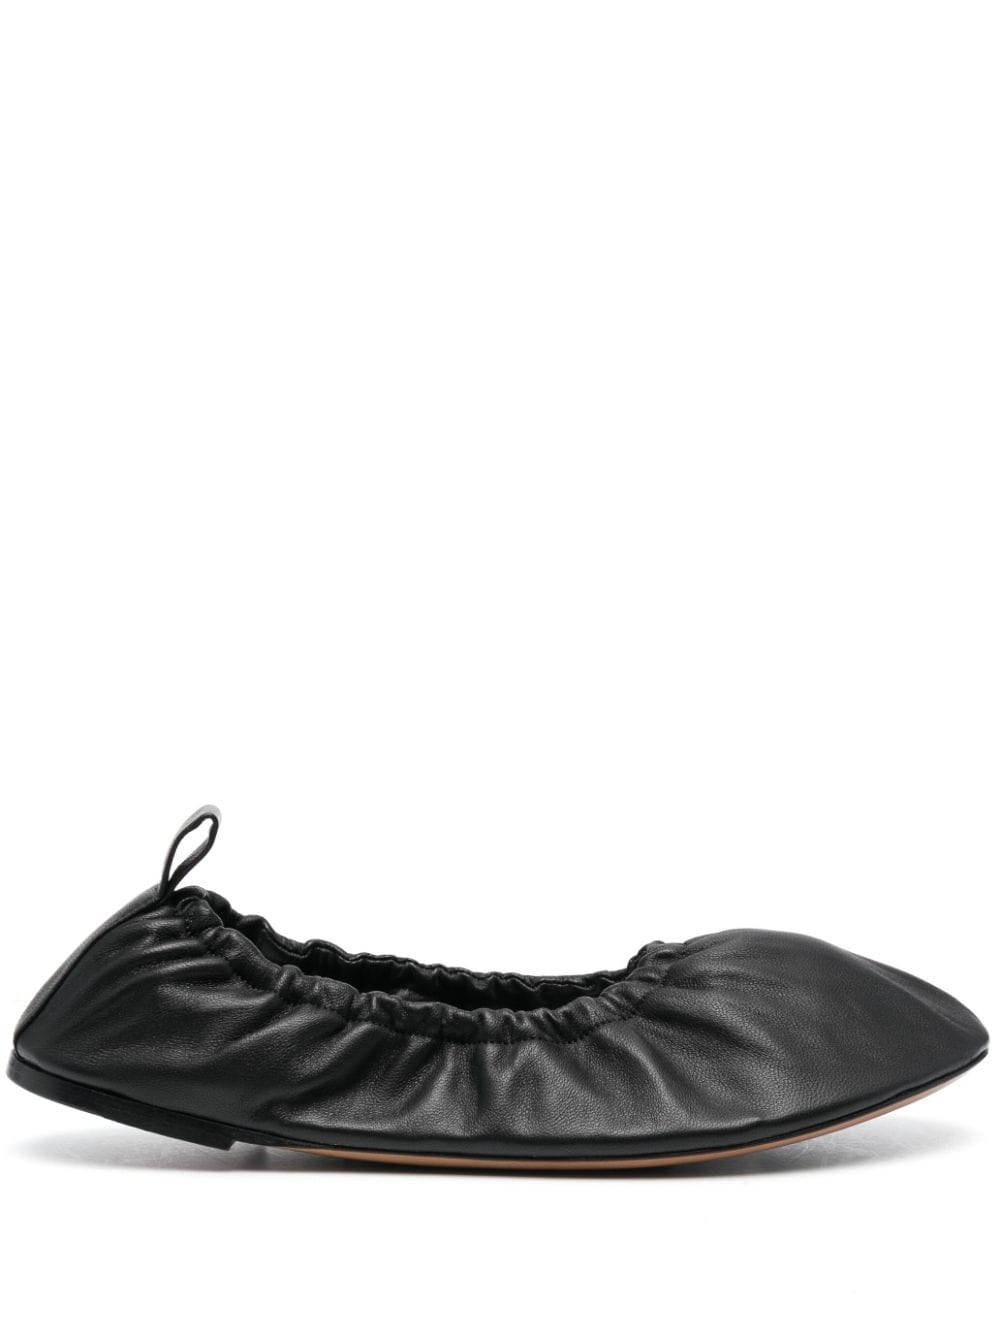 slip-on leather ballerina shoes - 1